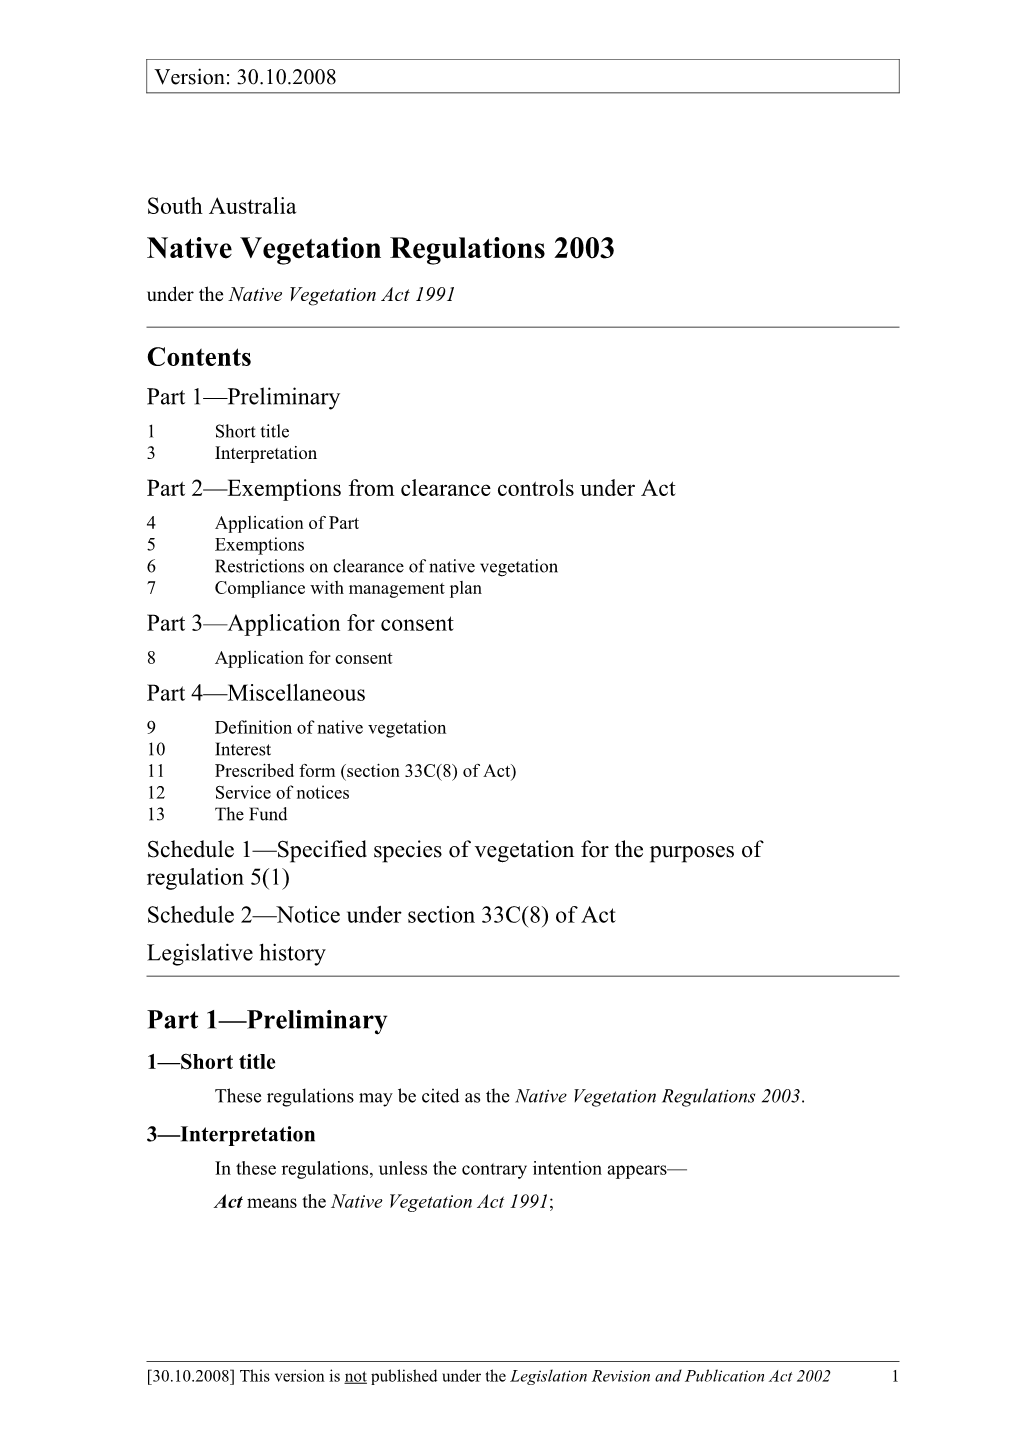 Native Vegetation Regulations2003